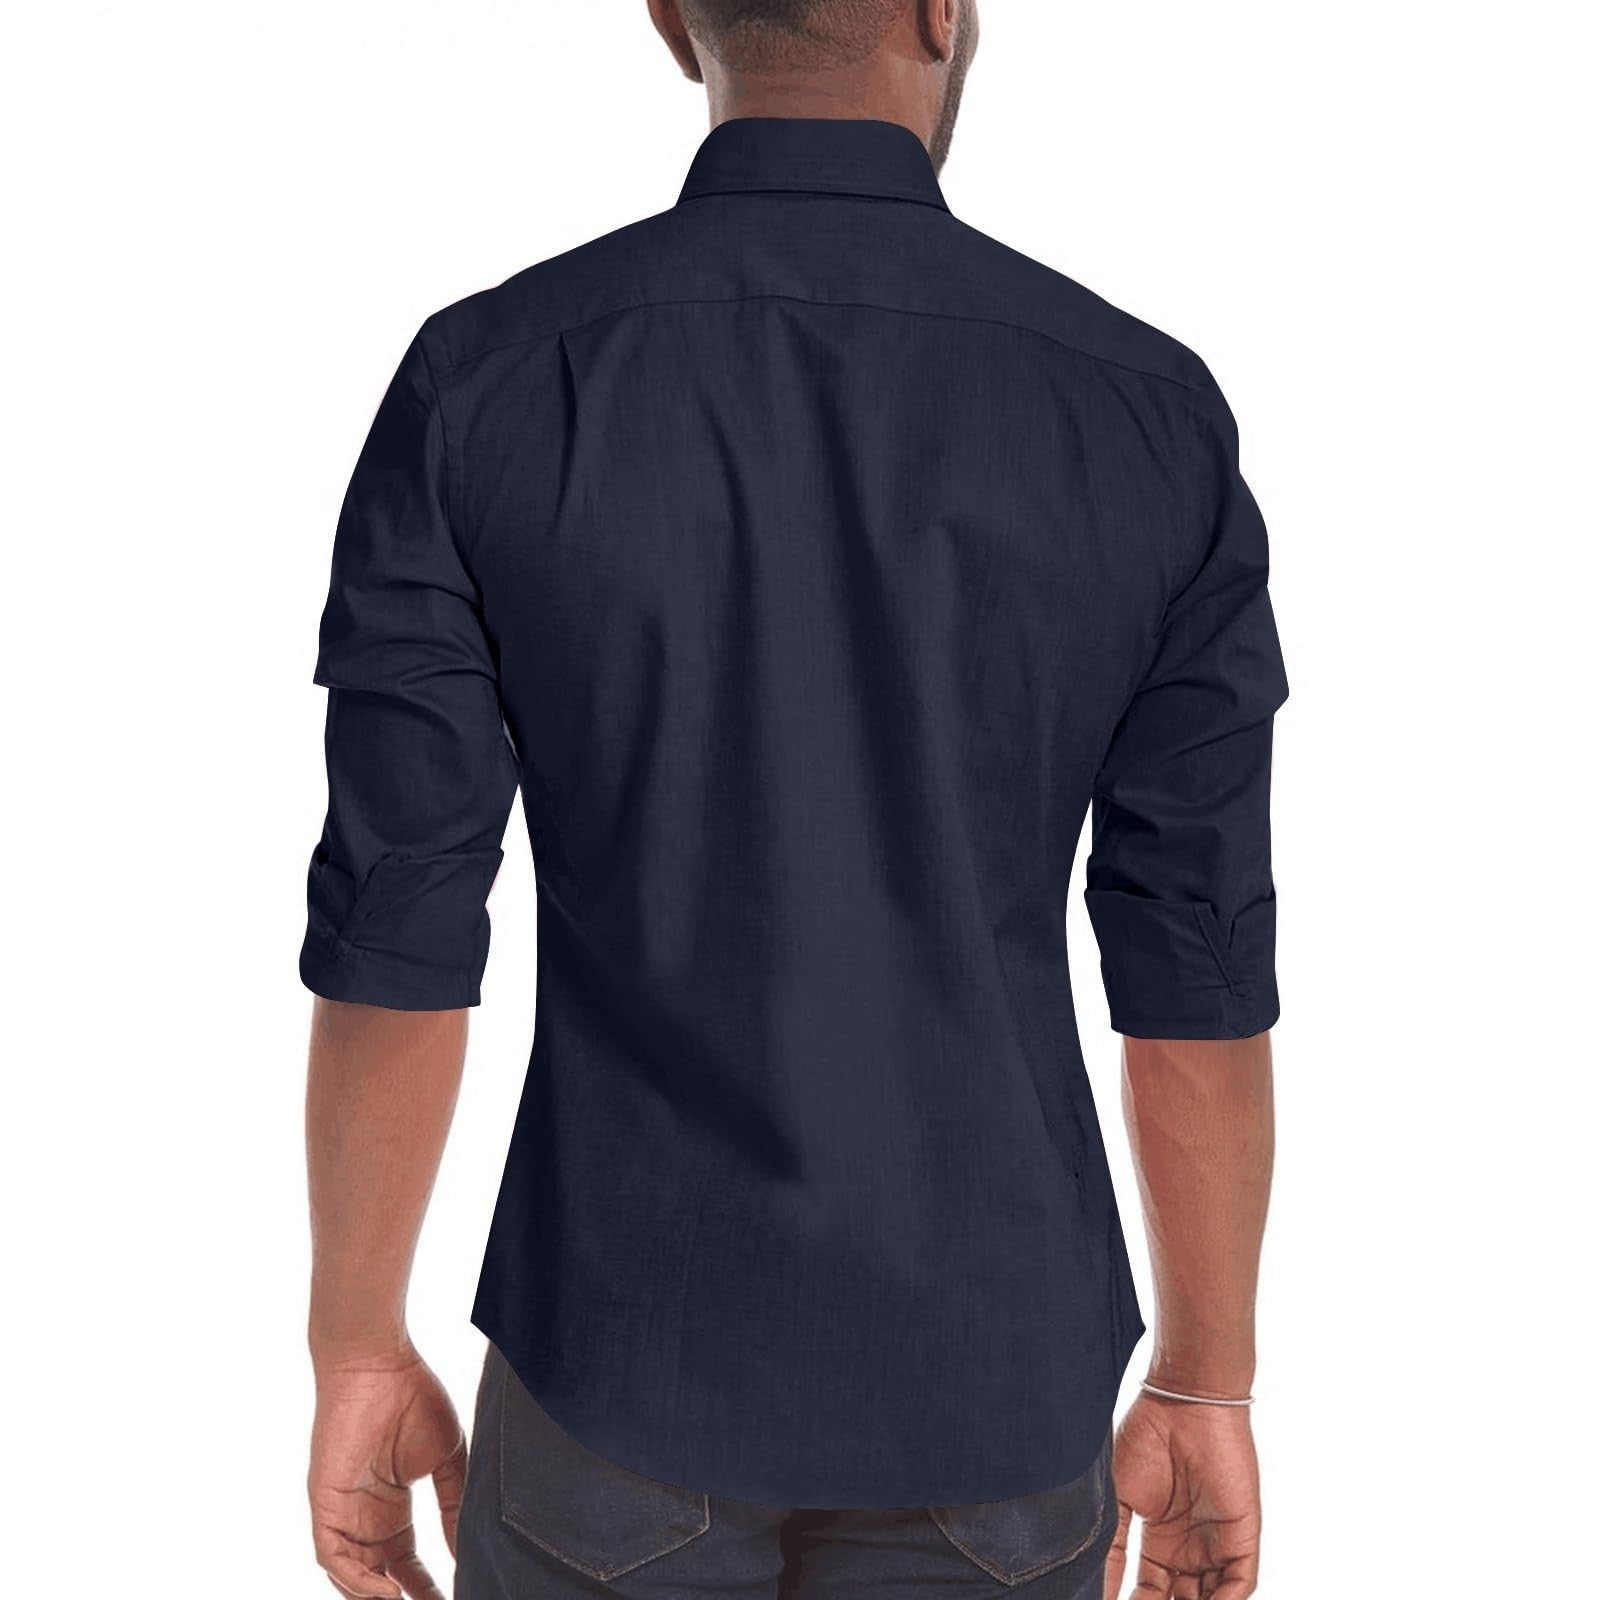 50% RABATT | Tresor Hemd™ - Einzigartiges Hemd mit Reissverschluss